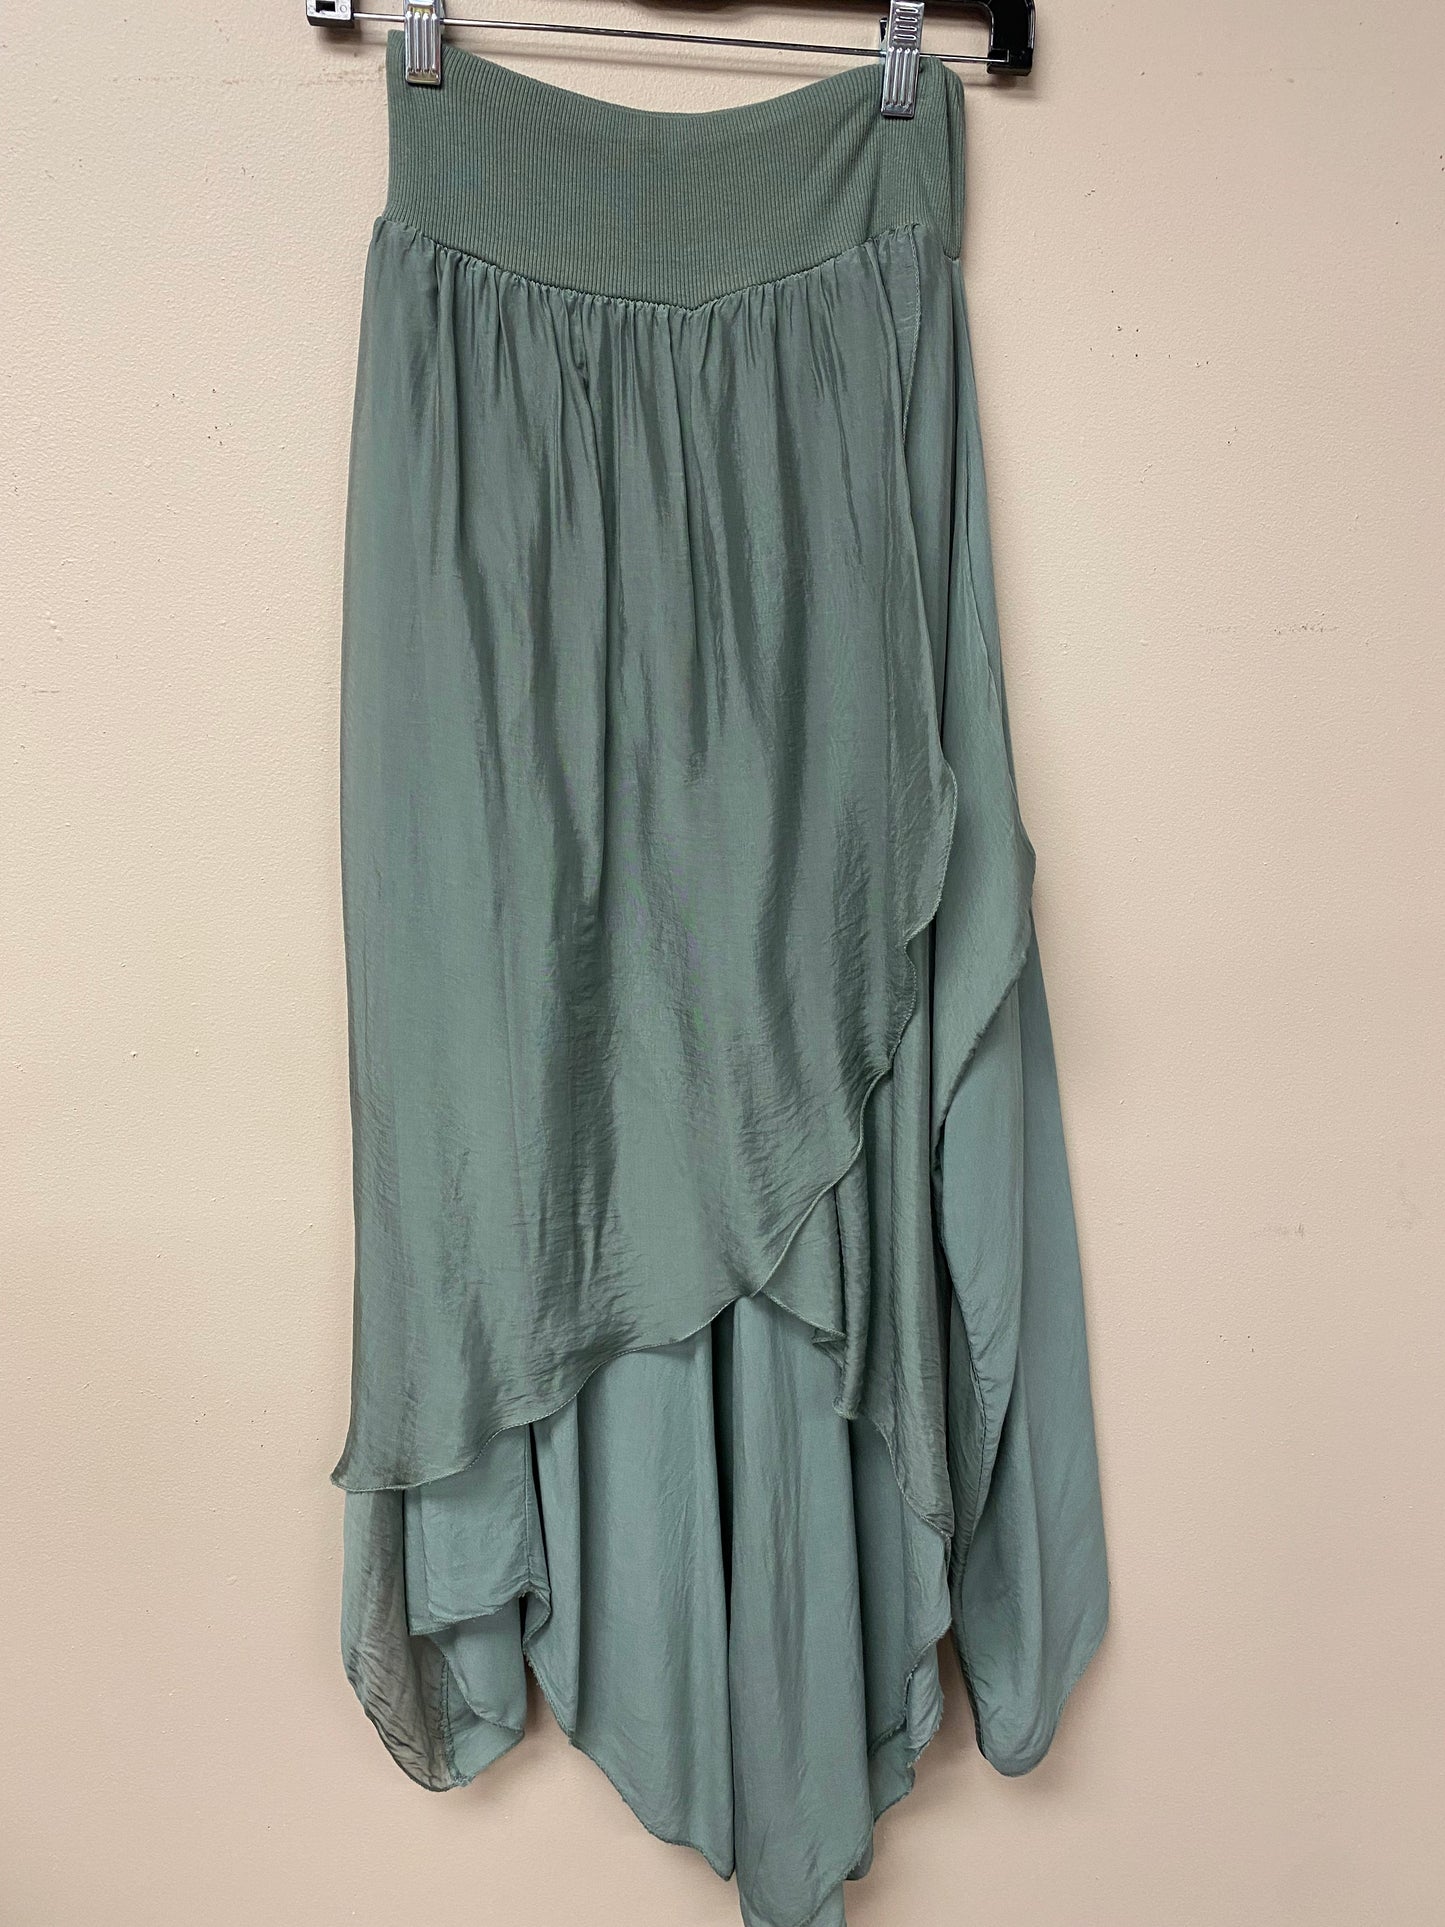 Italian silky pant/skirt.